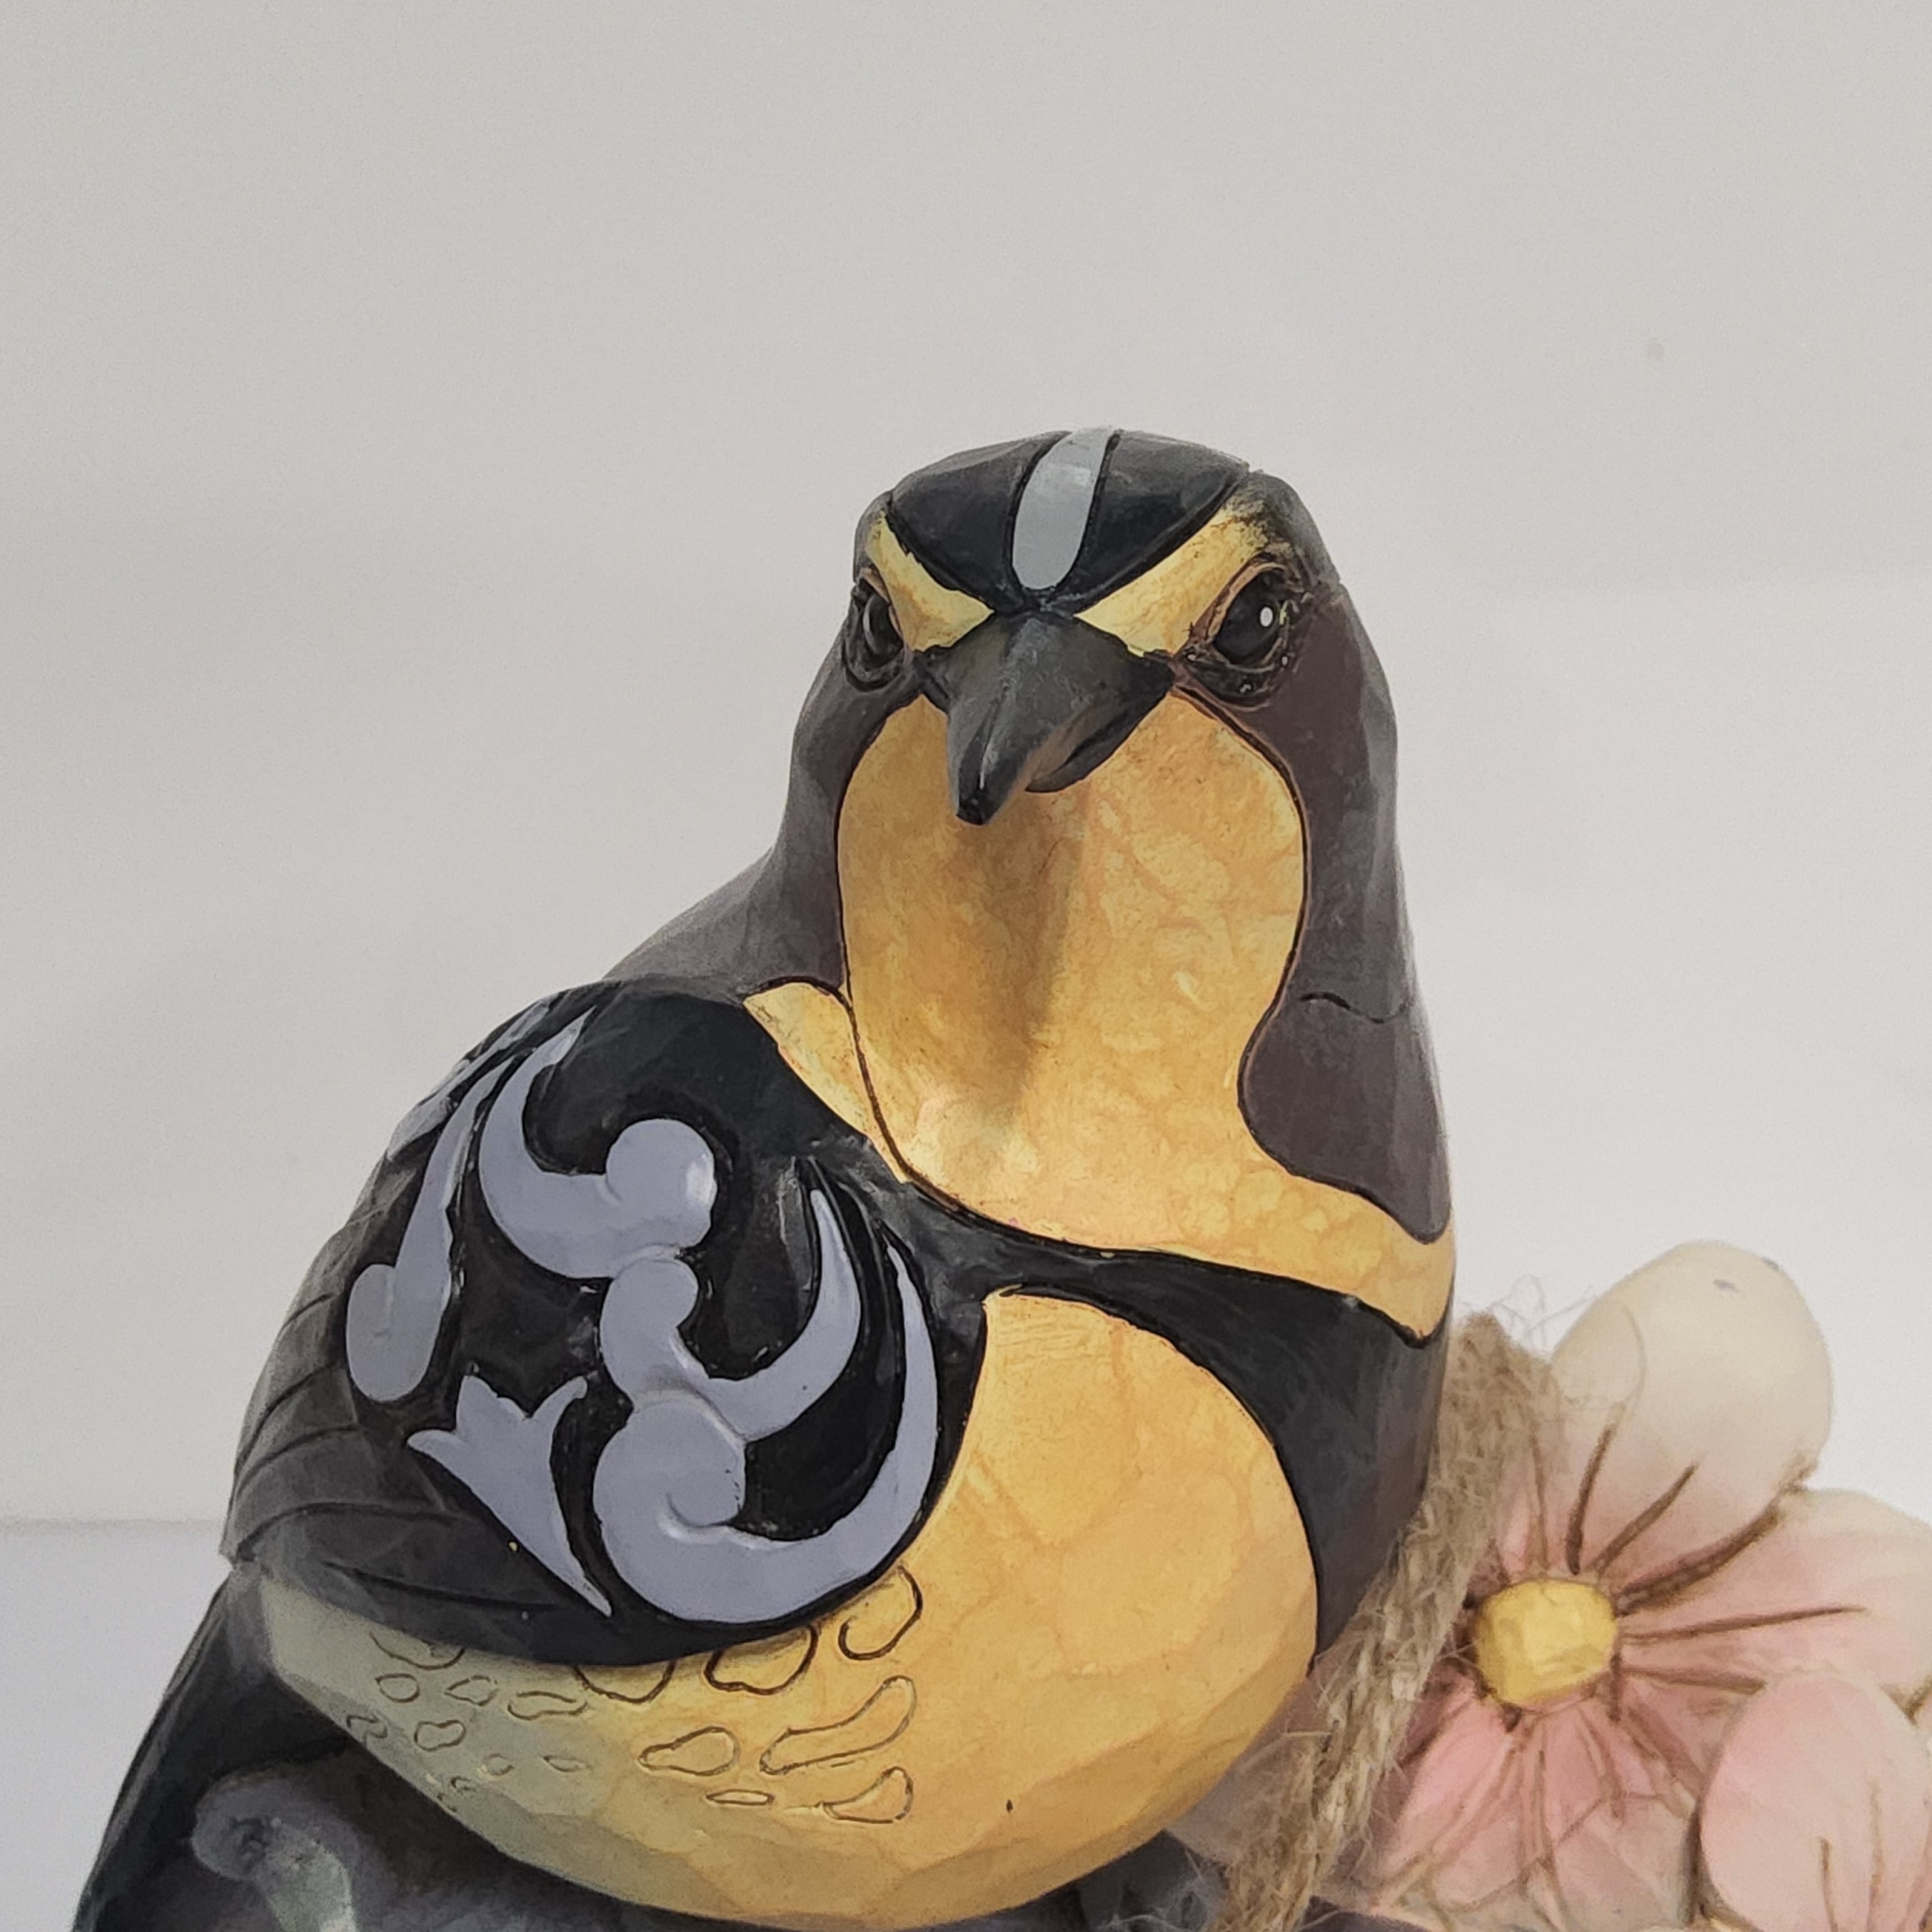 Enesco / Jim Shore Bird Figurine - Meadowlark - "Grassland Beauty" 6012265